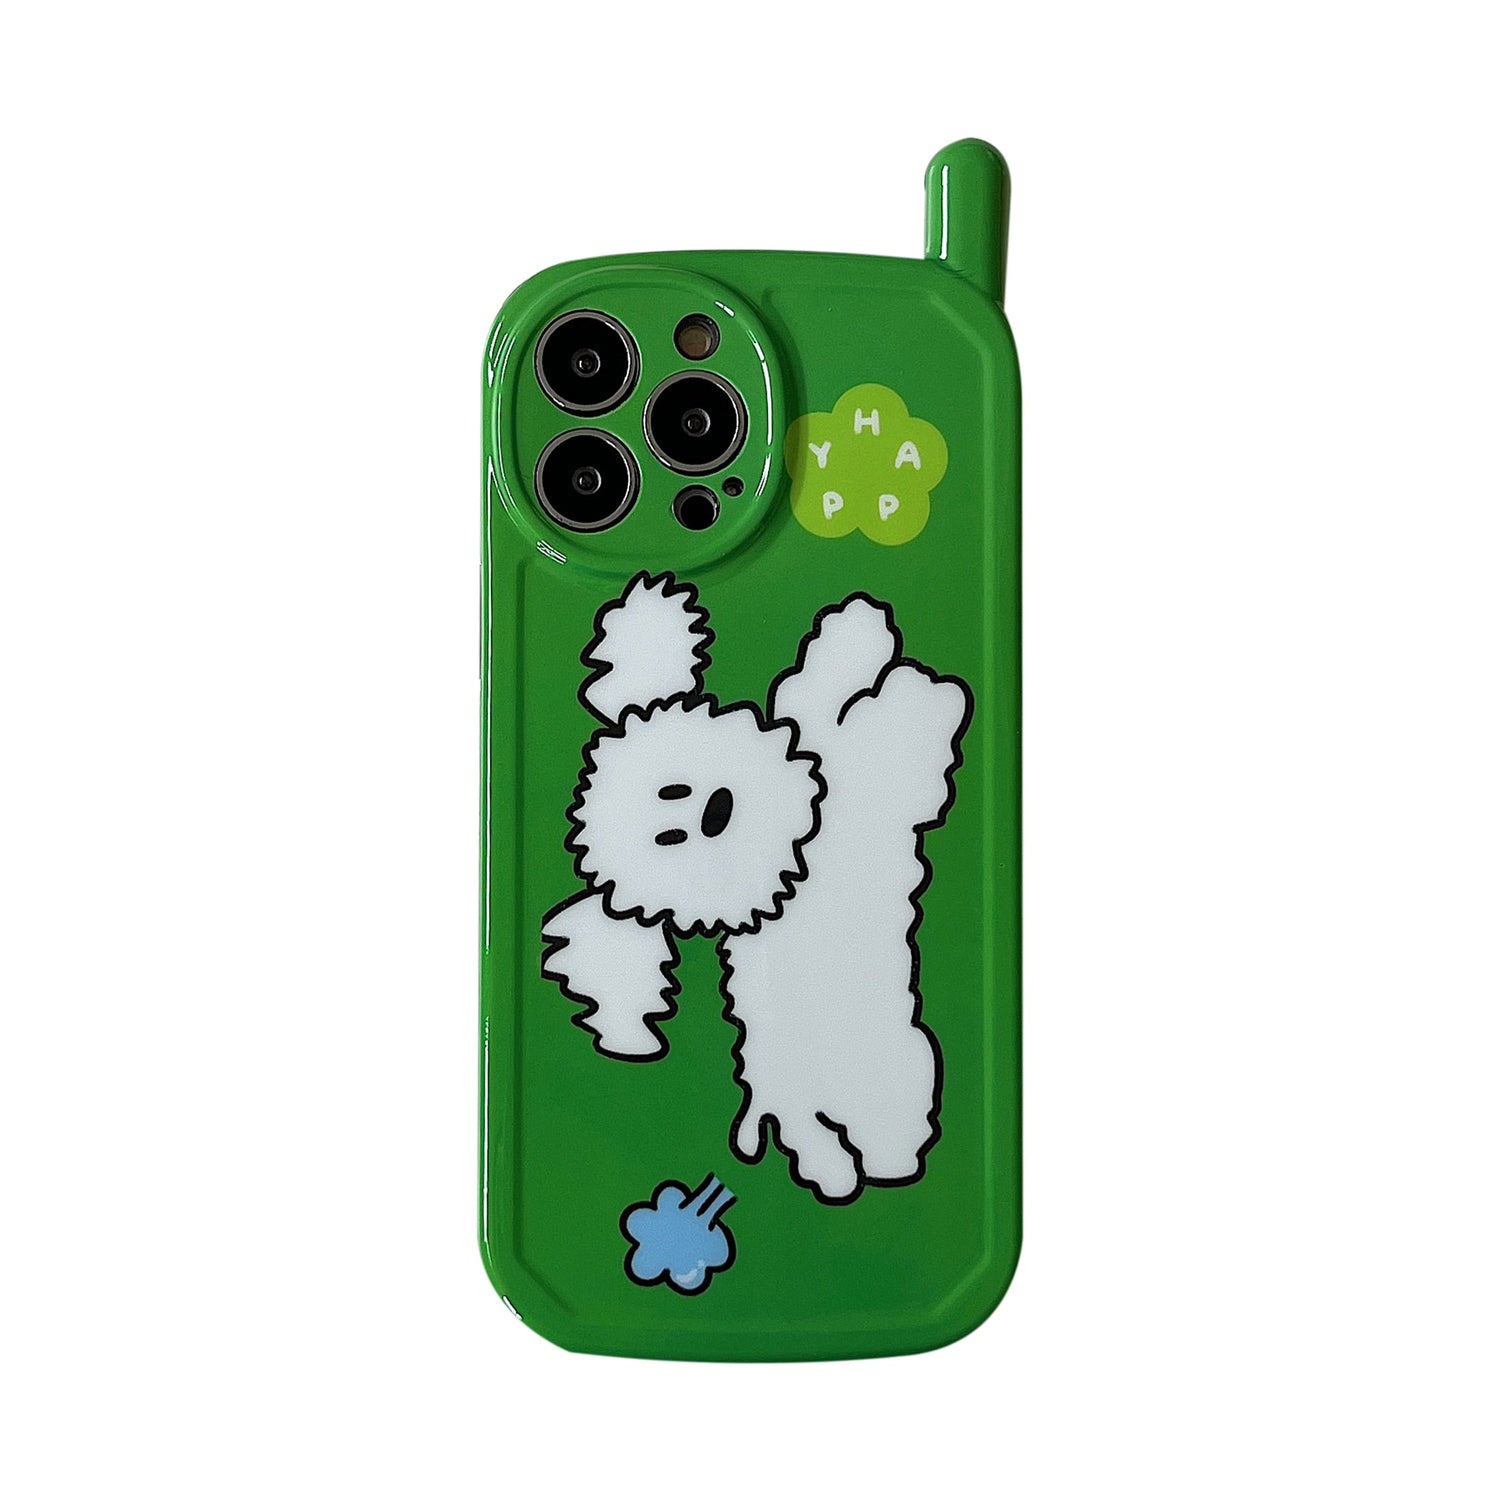 Cute Green Dog Phone Case - iPhone Cases